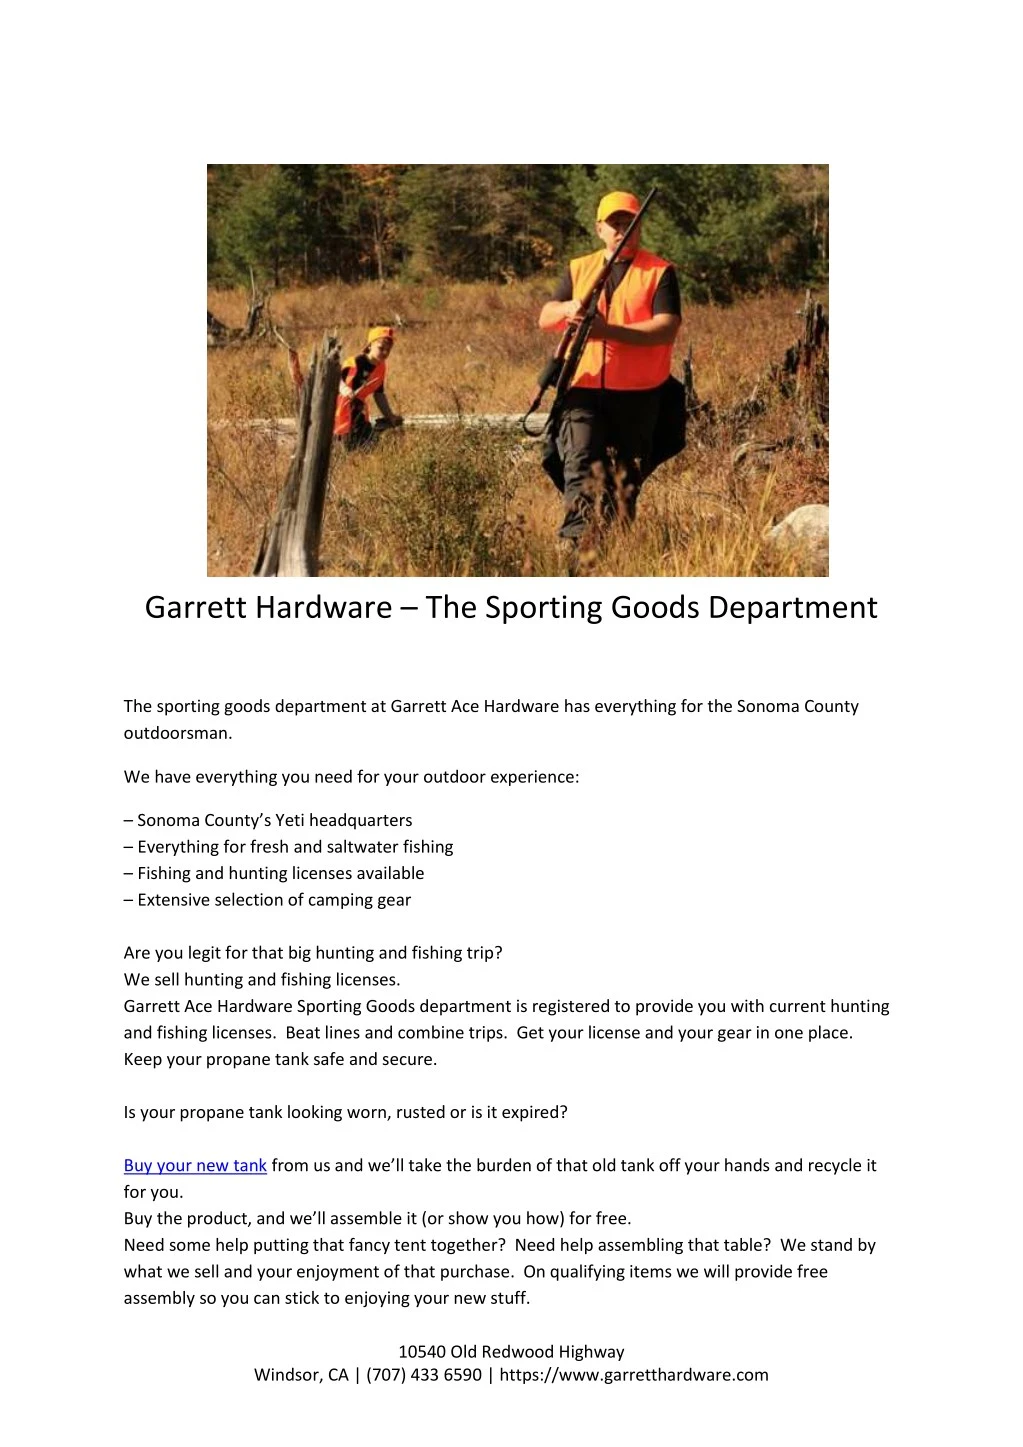 garrett hardware the sporting goods department